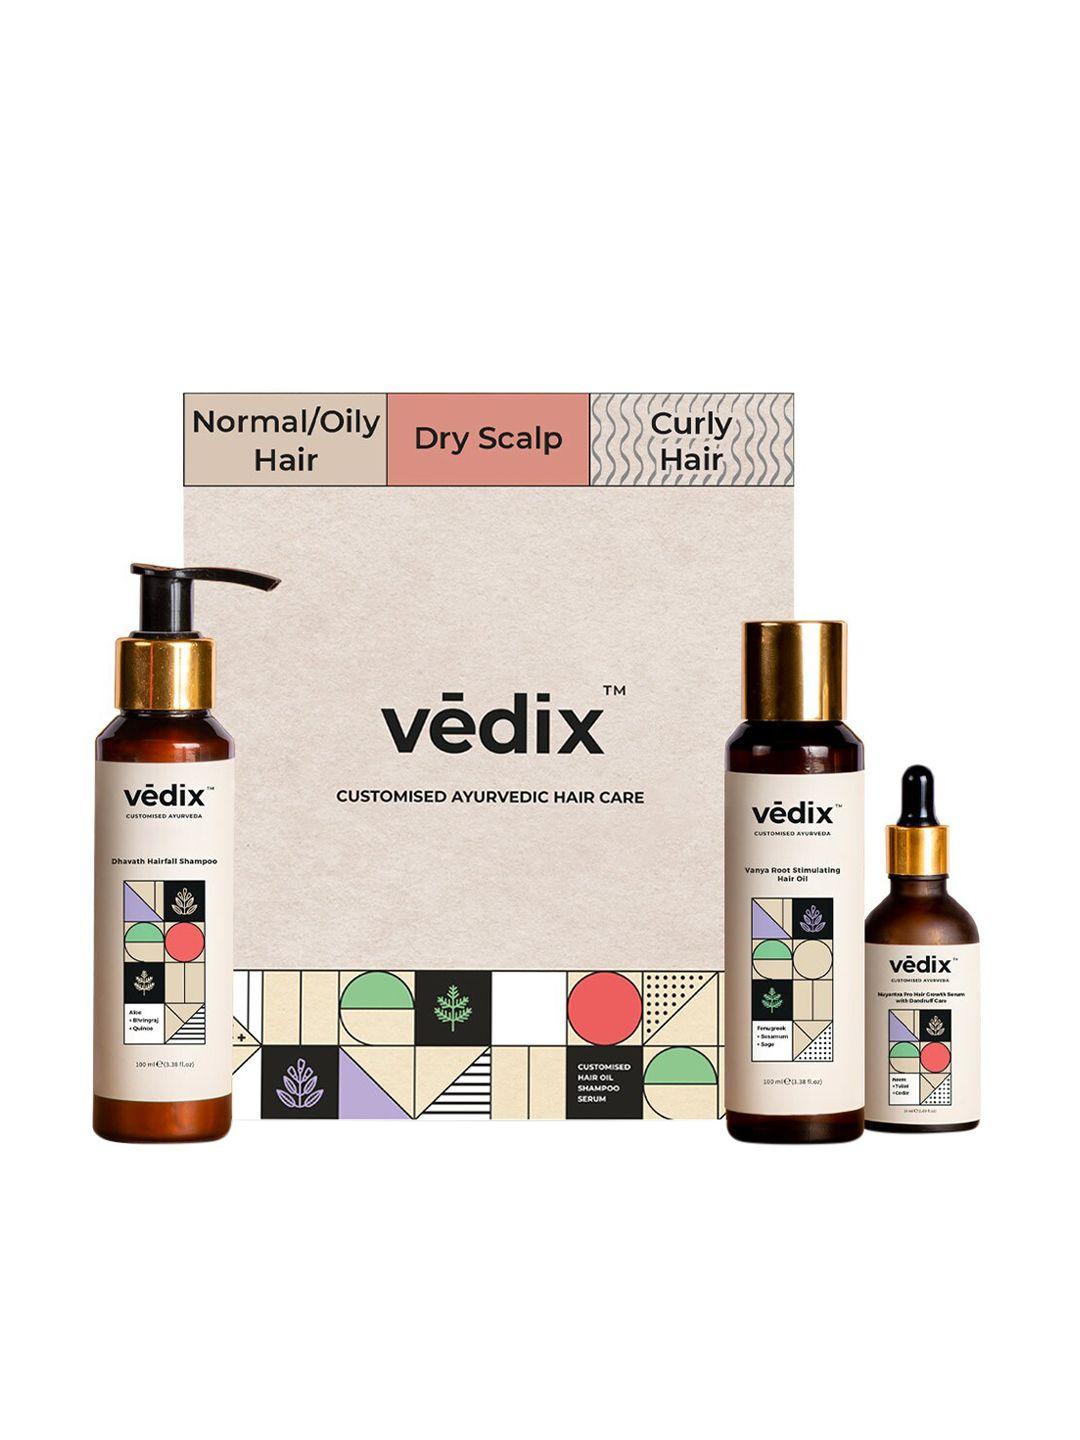 vedix customized hair fall control regimen for dry hair - dry scalp & curly hair